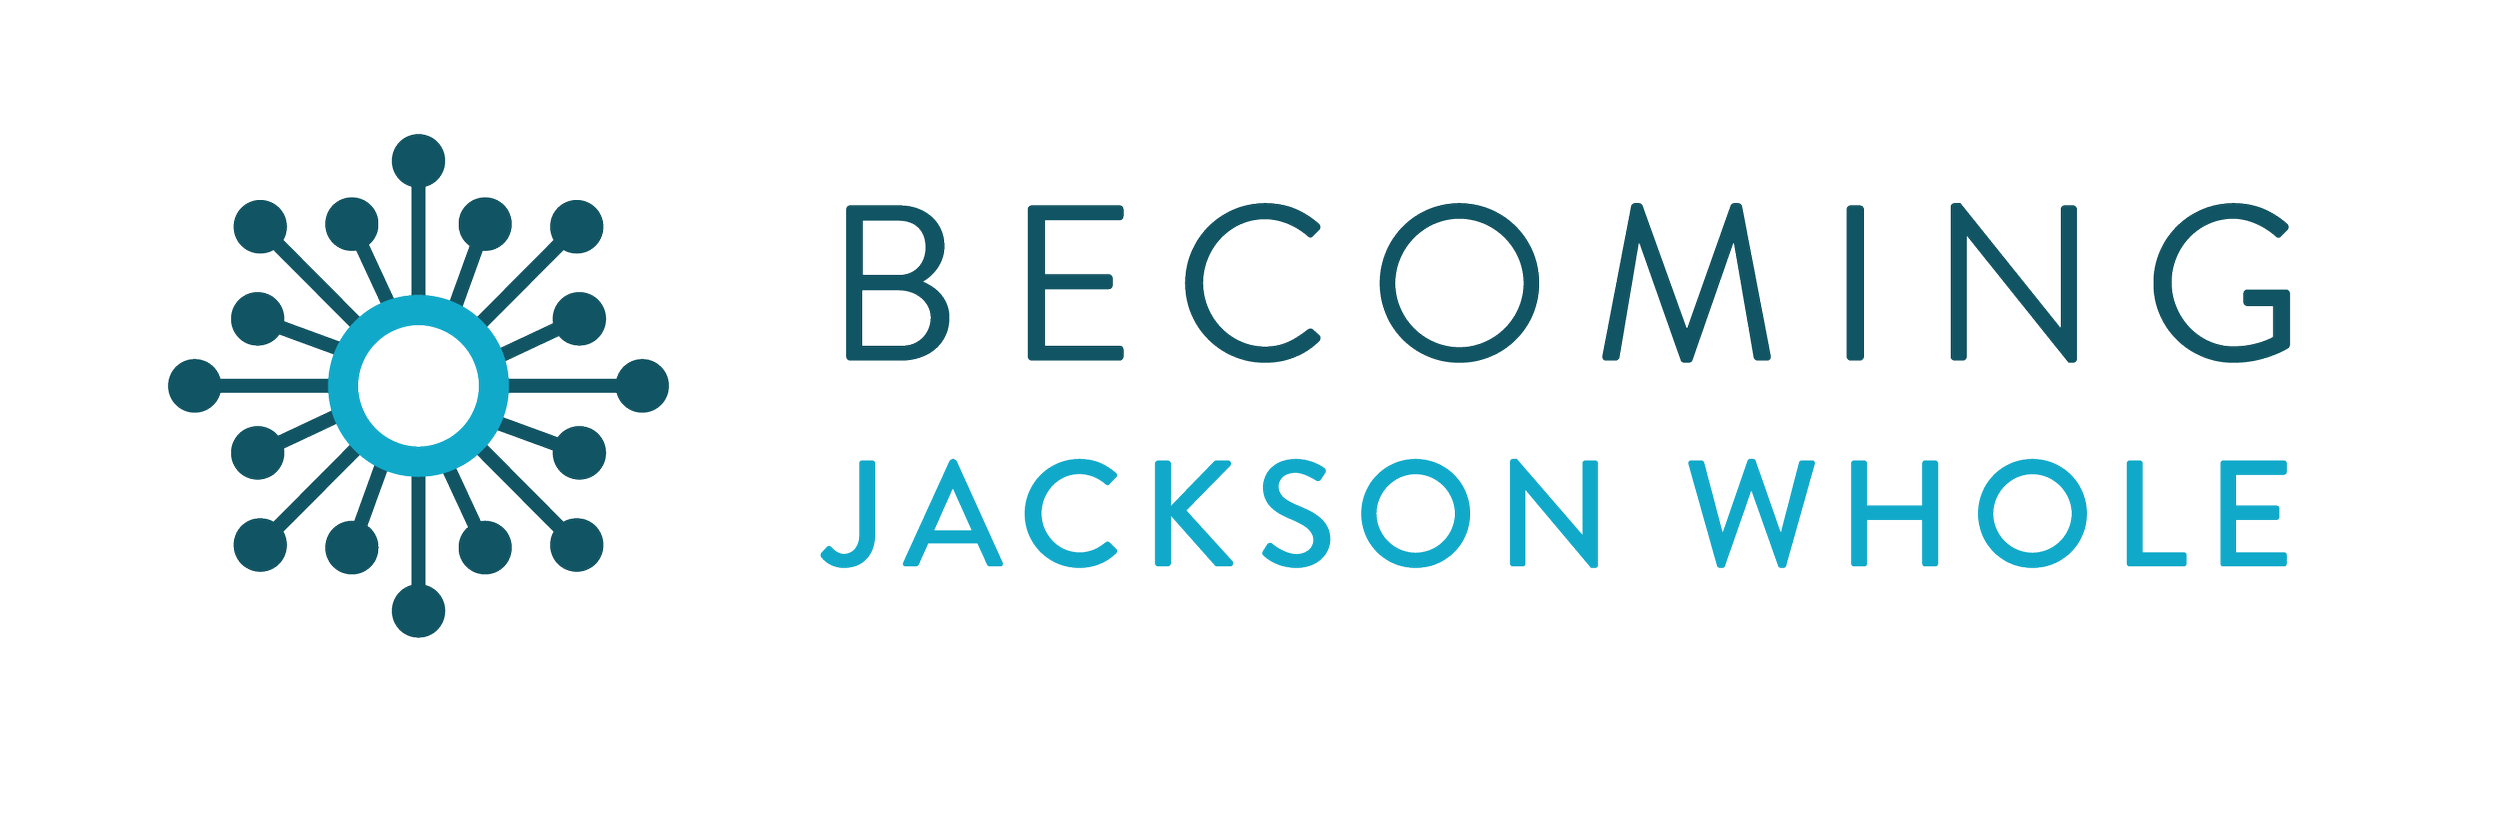 Becoming Jackson Whole